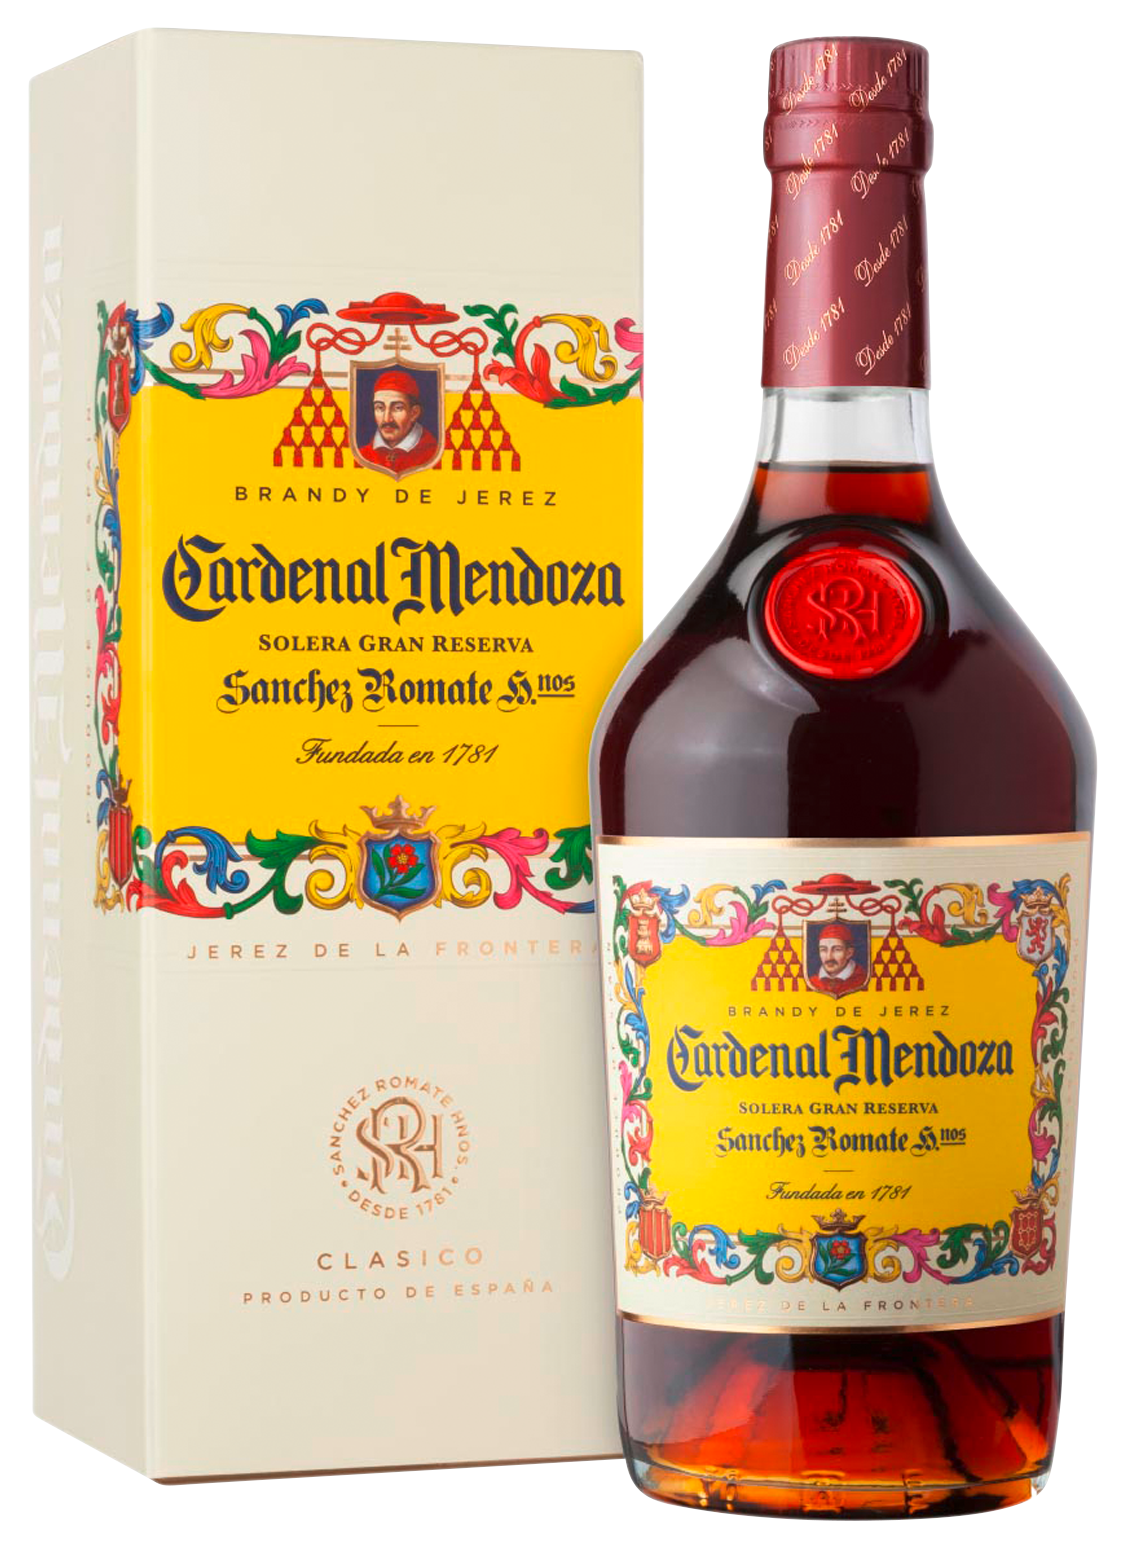 Cardenal Mendoza Gran Reserva Brandy 